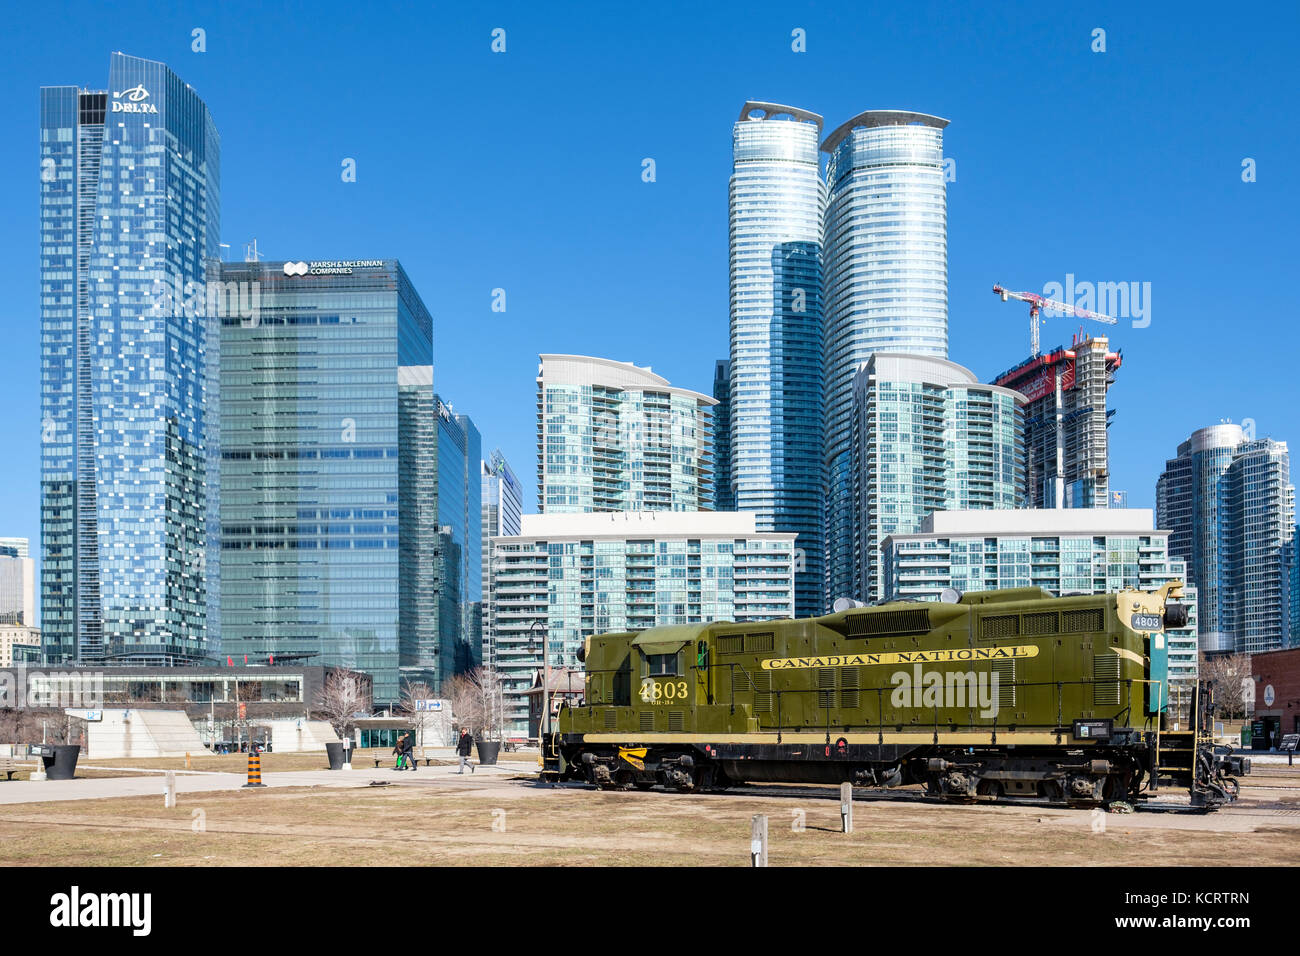 Toronto Railway Museum, Roundhouse Park, 4803 Canadian National Railway locomotiva verde, edifici moderni in background, Toronto, Ontario, Canada. Foto Stock